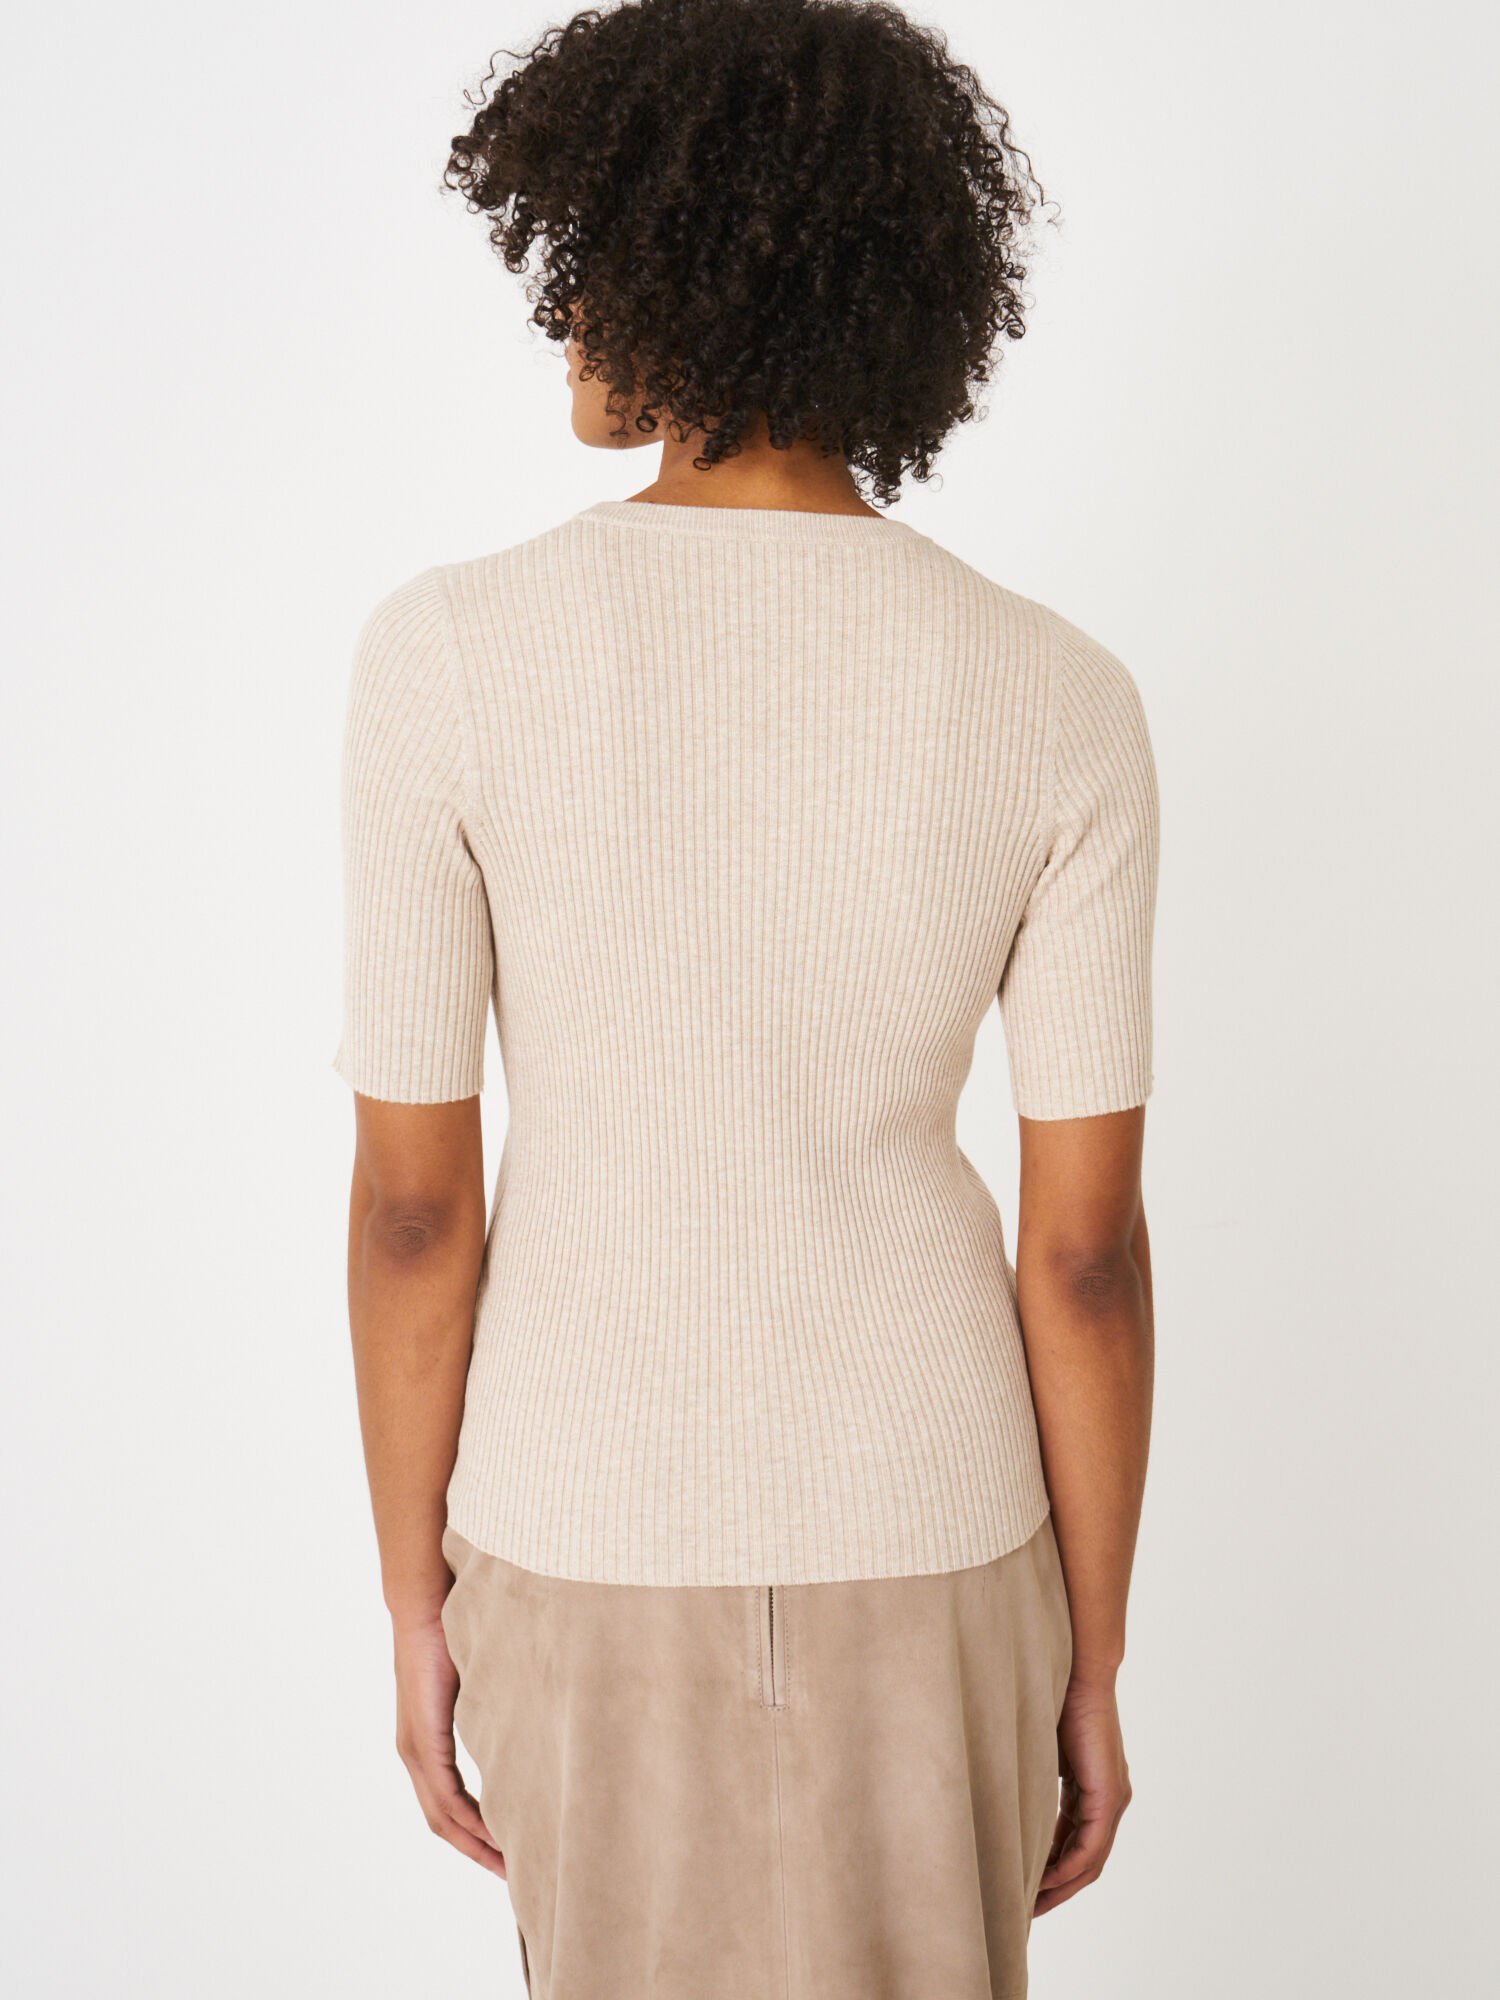 short sleeve rib knit / beige